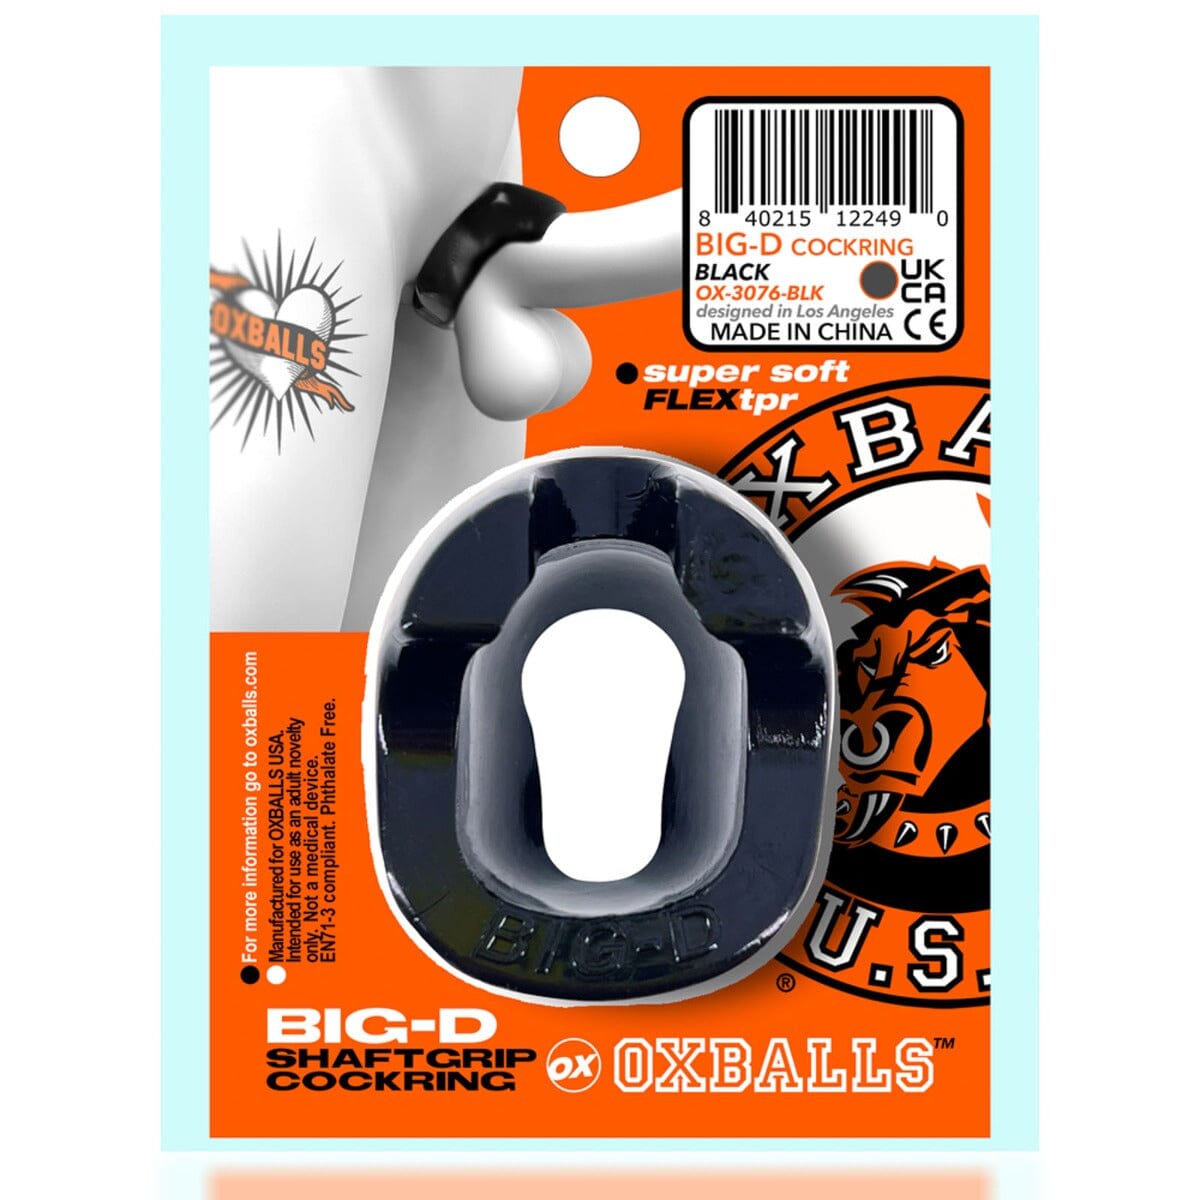 Oxballs Big-D Shaft Grip C-Ring